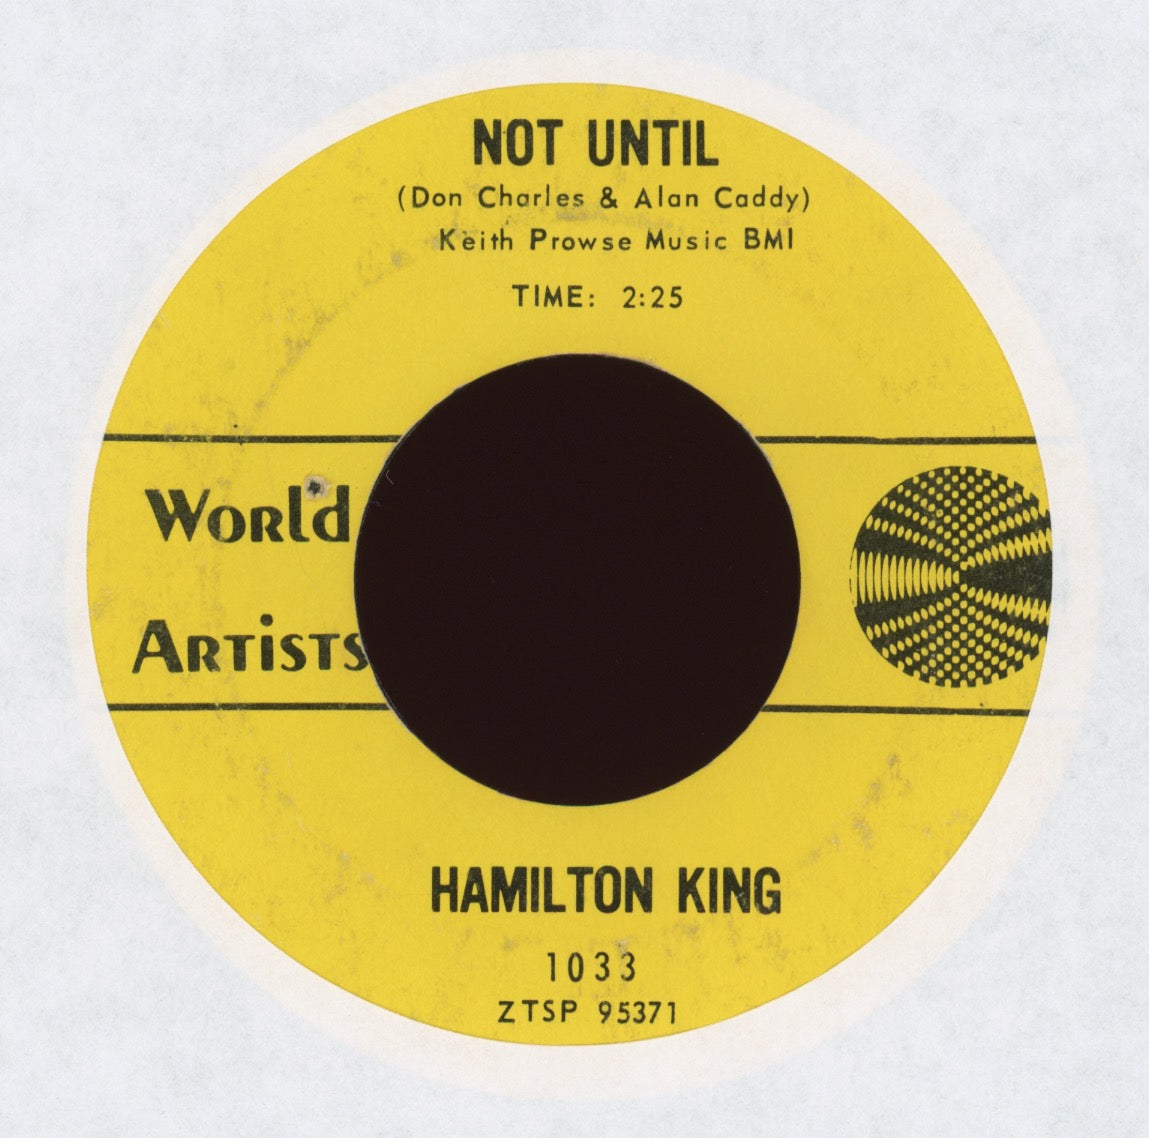 Hamilton King - Diana on World Artists